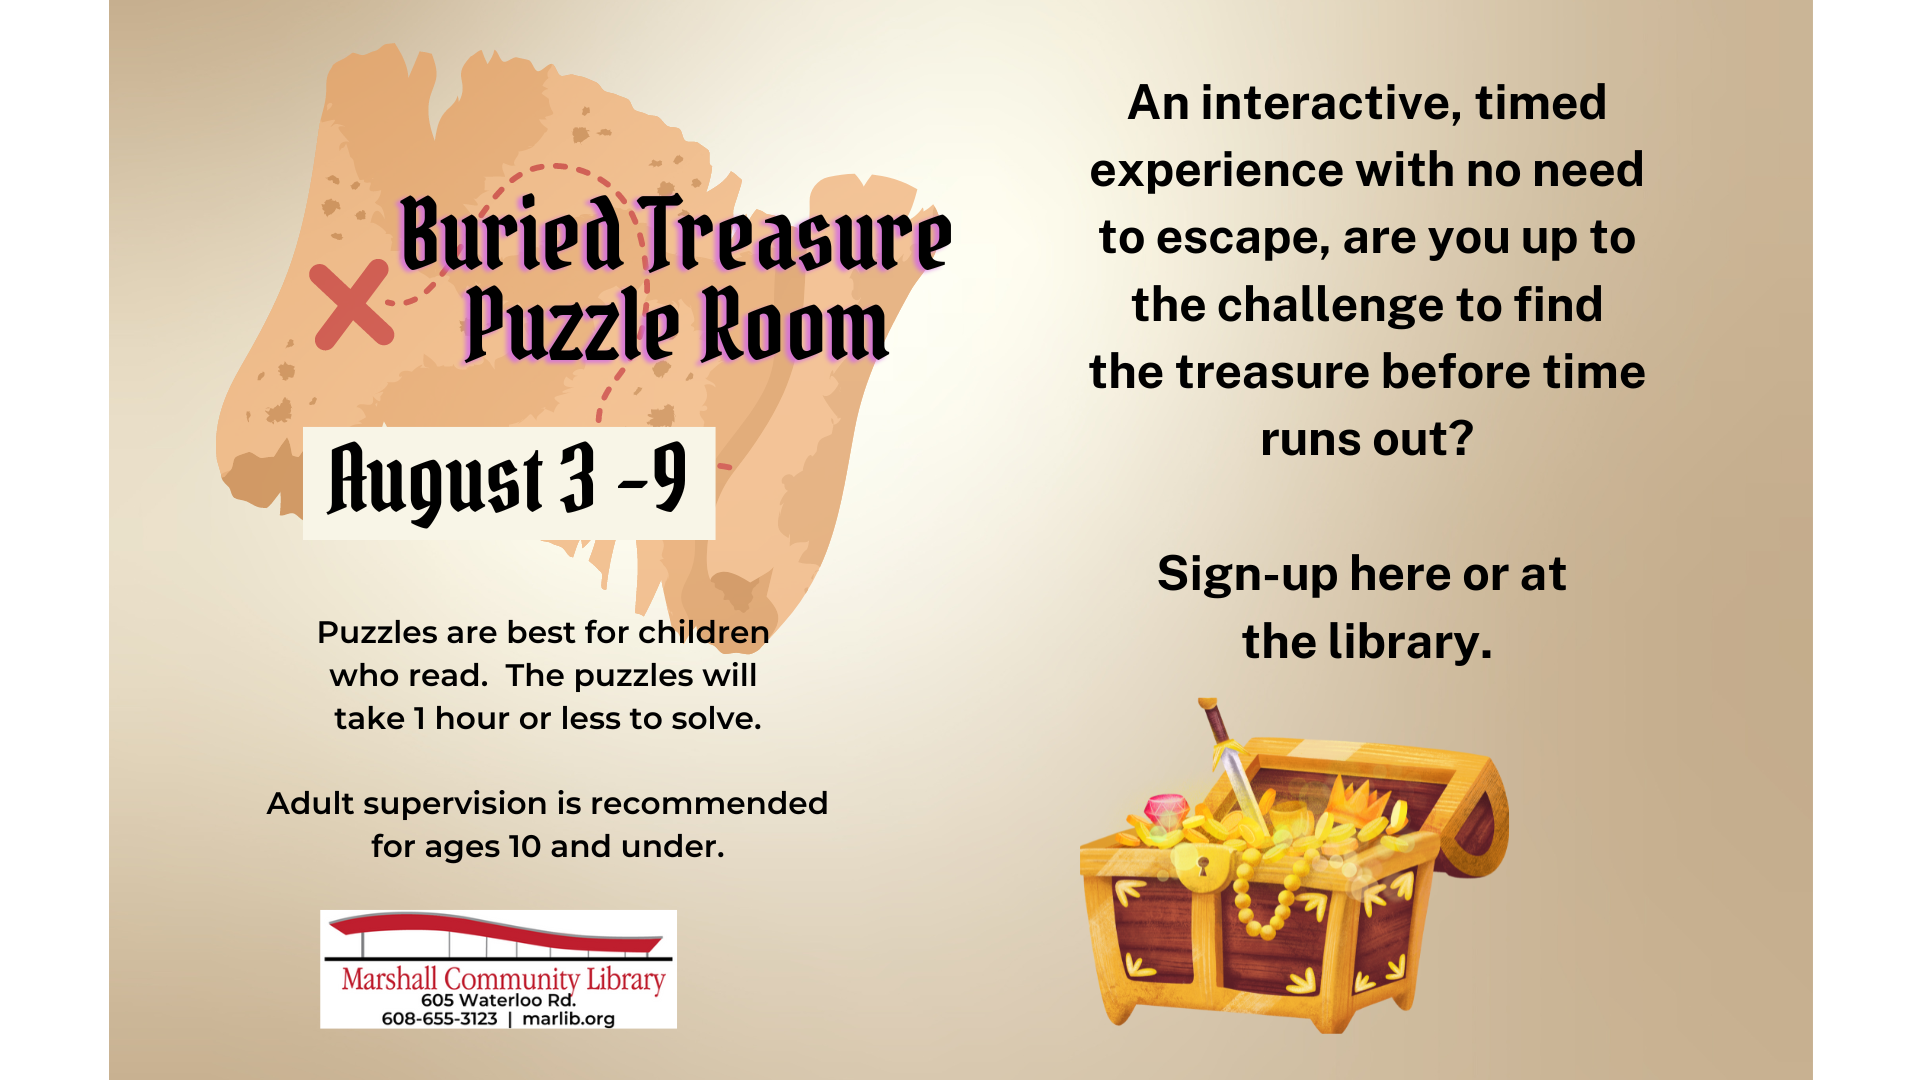 Buried Treasure Puzzle Room